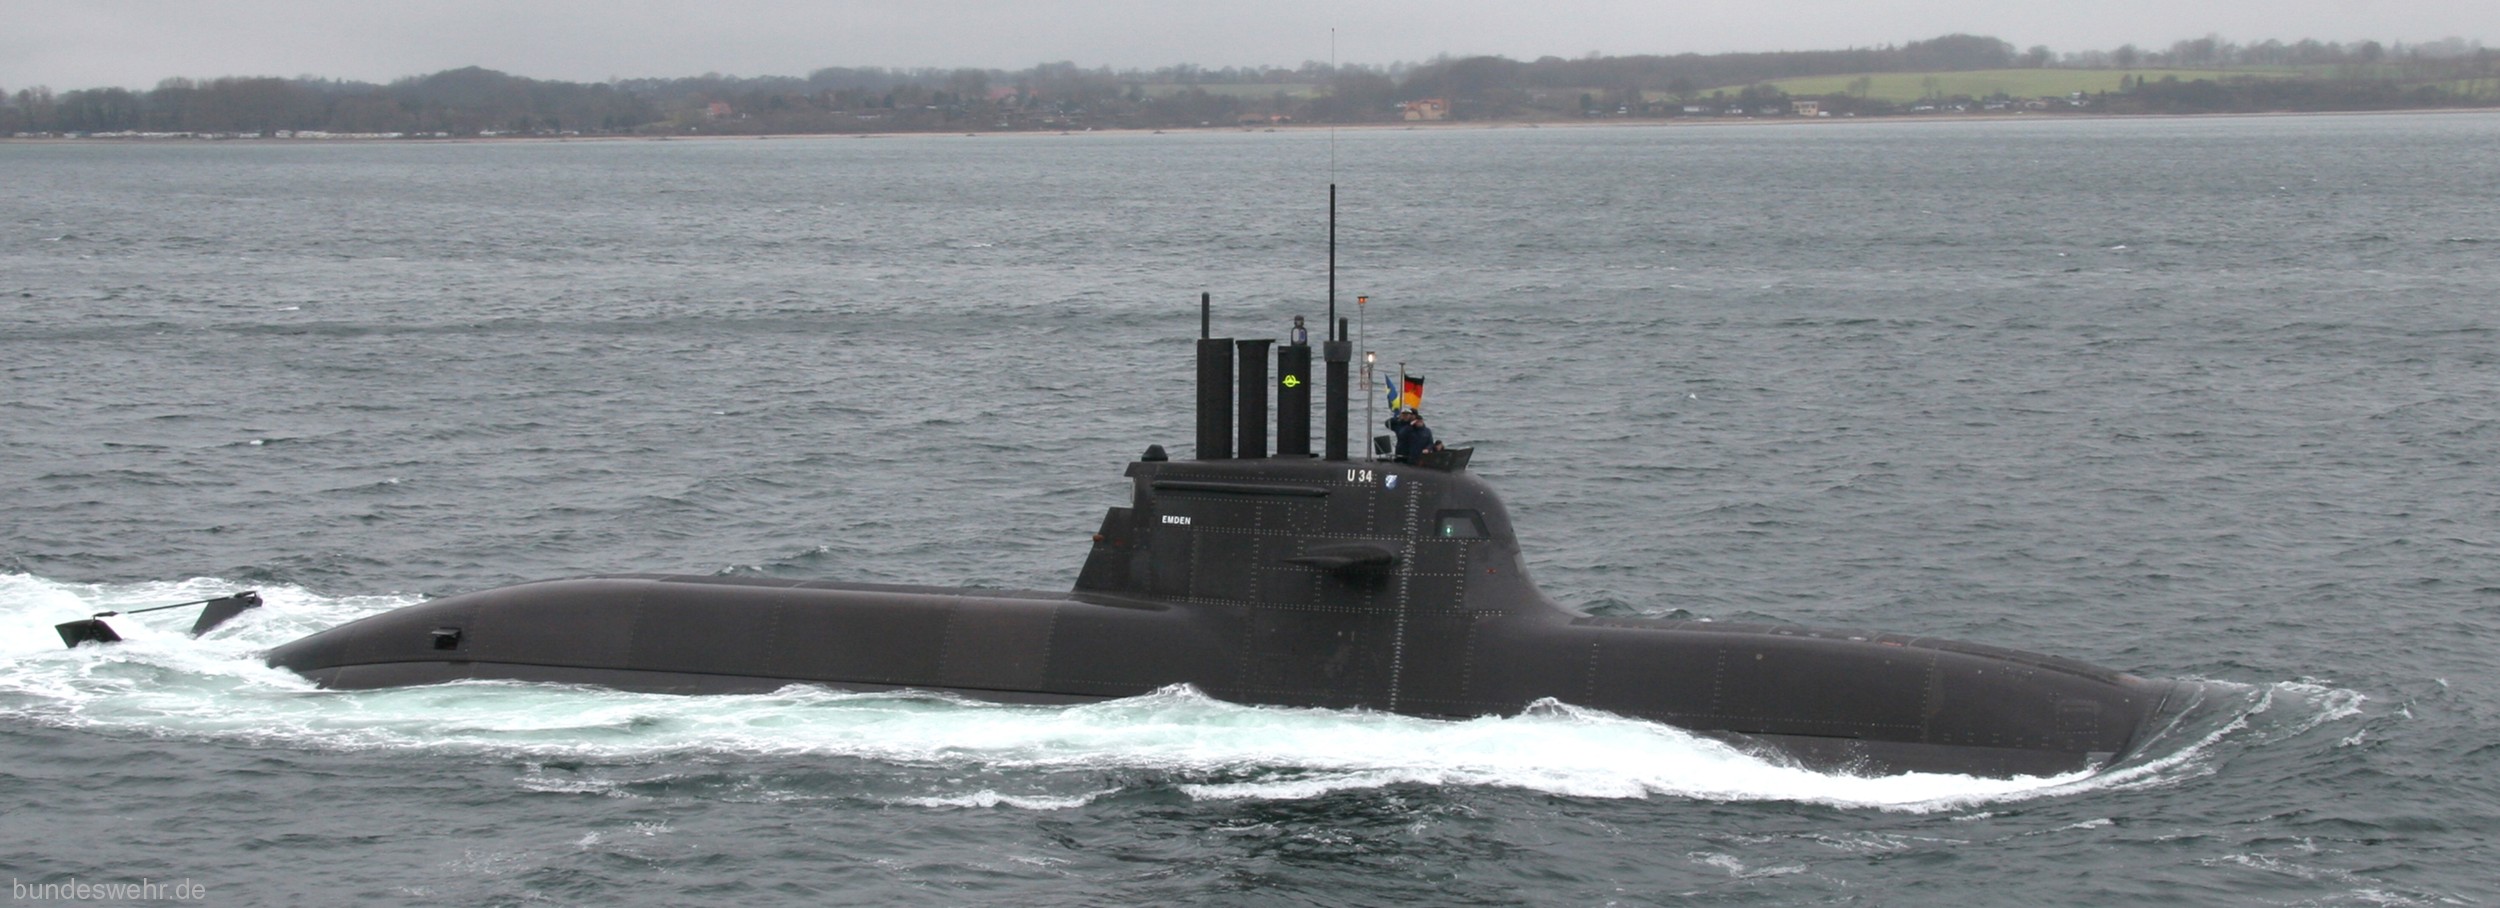 s-184 fgs u34 type 212a class submarine german navy 18